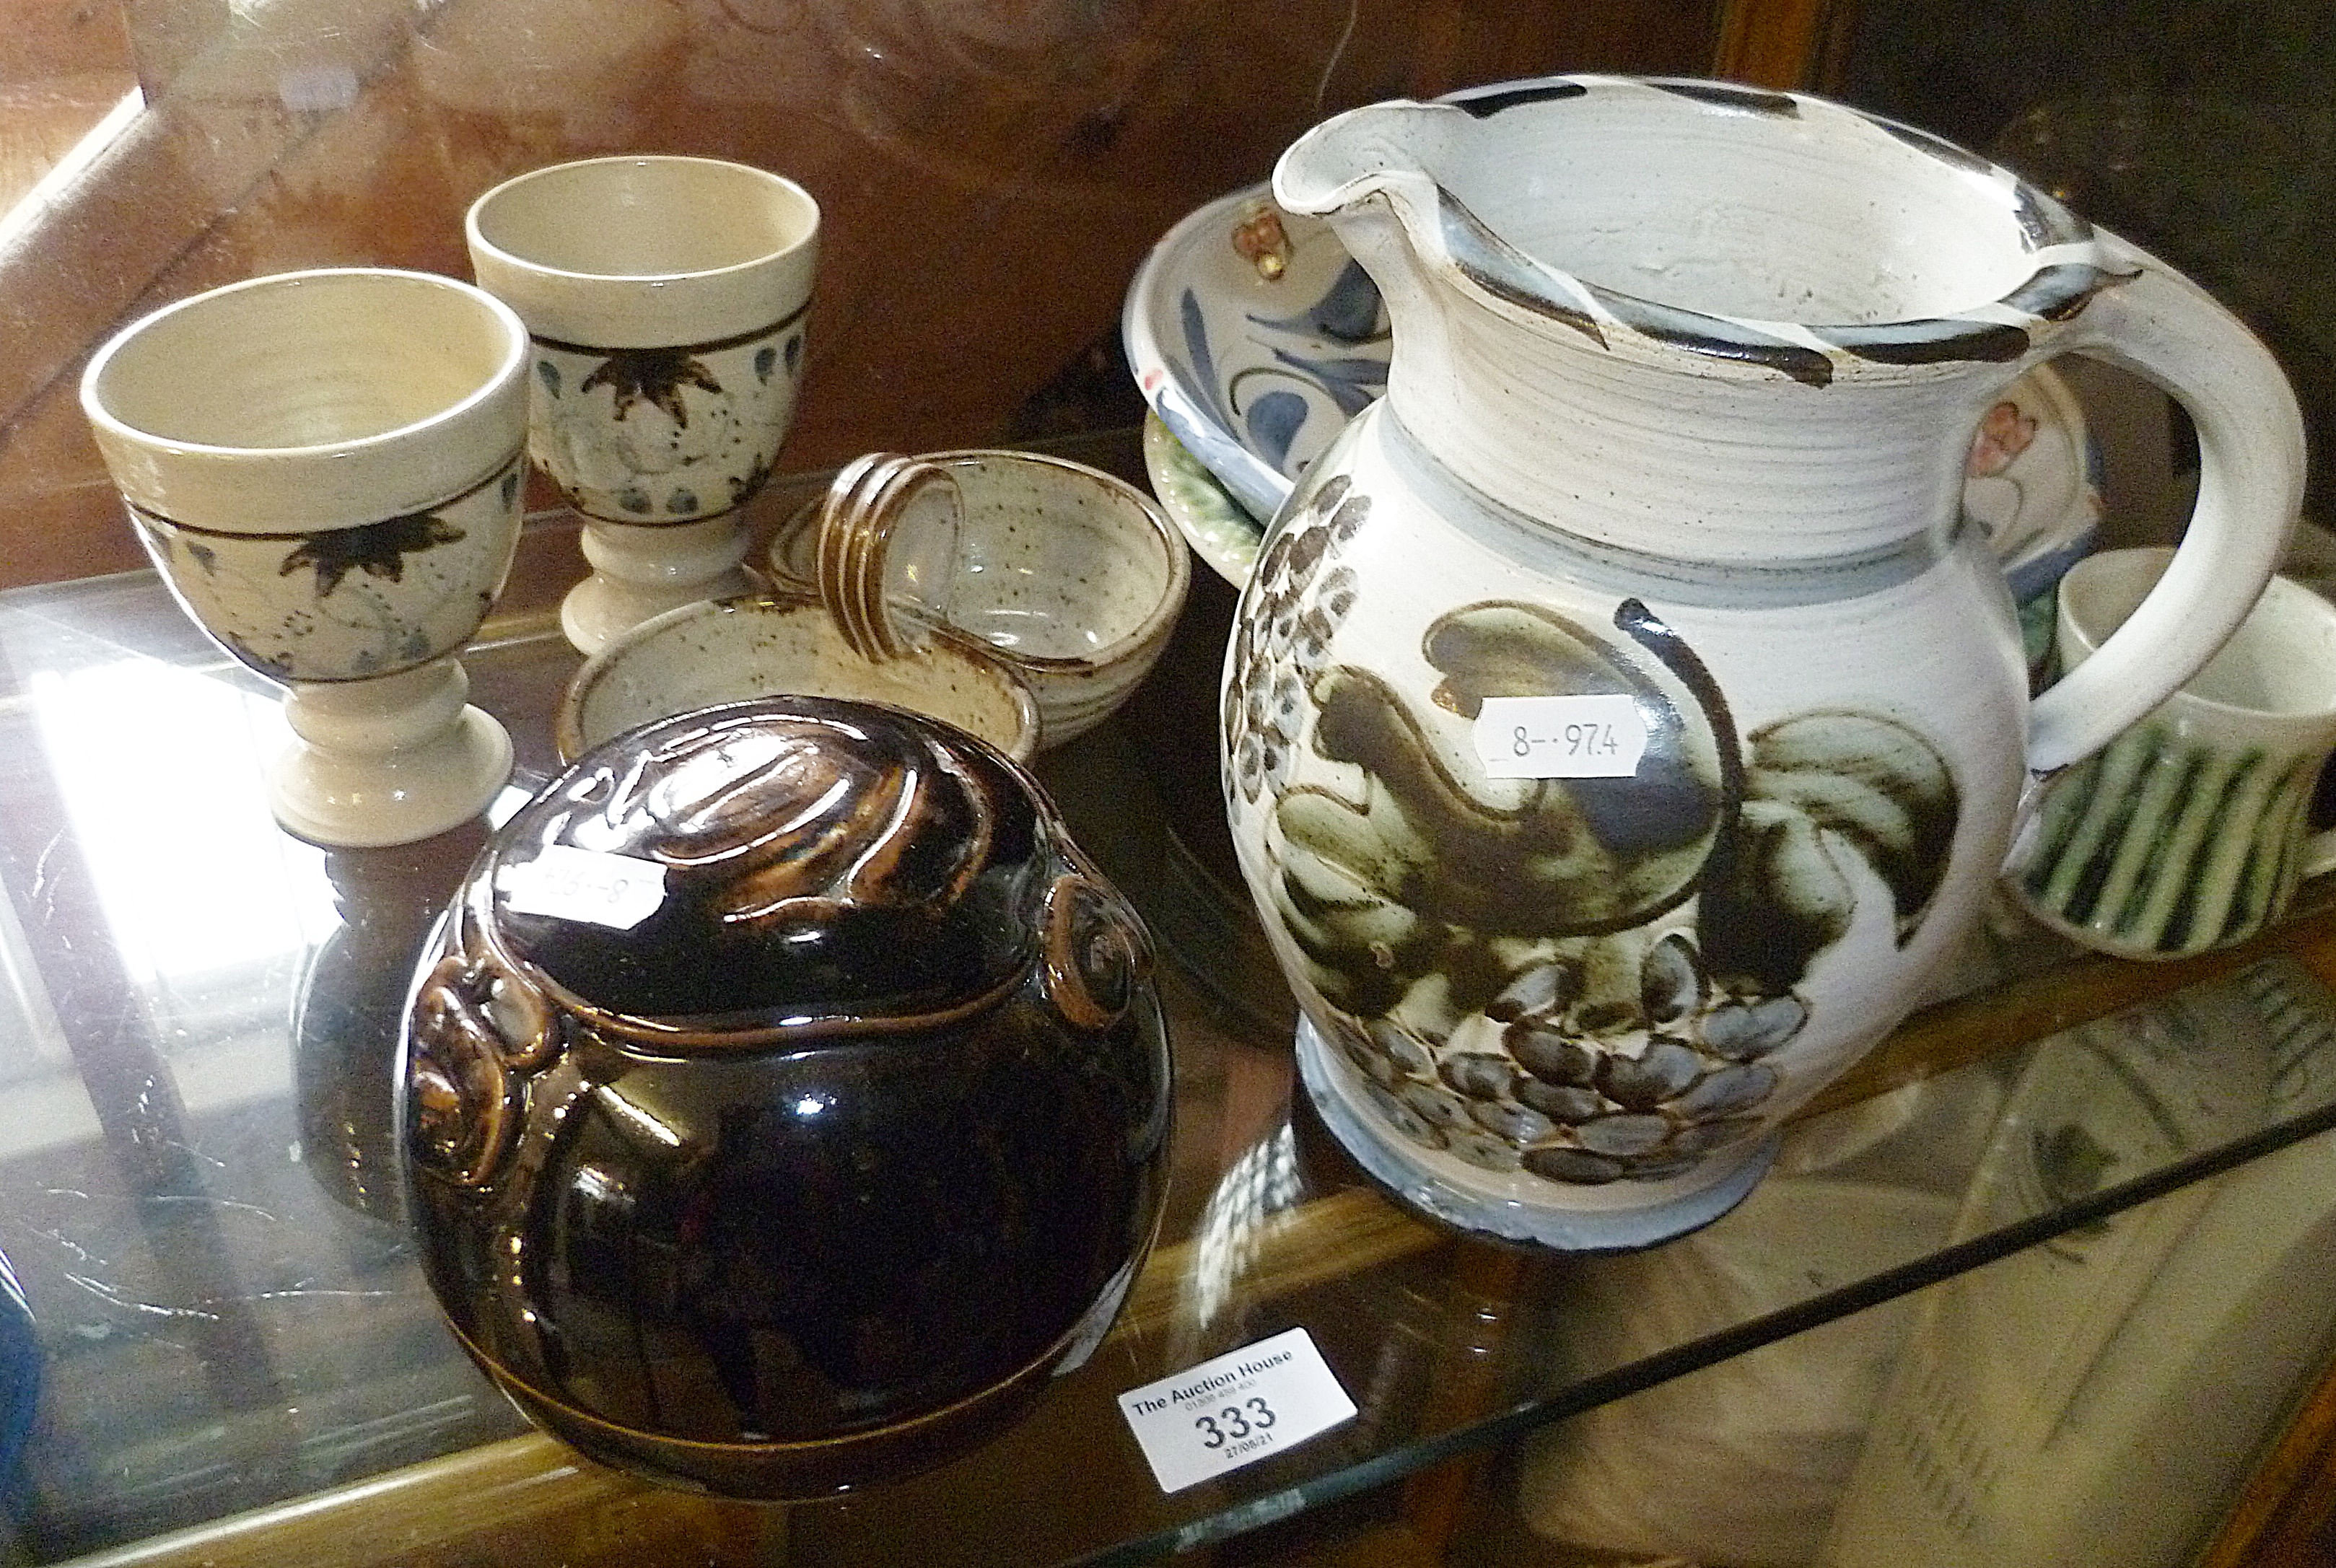 Studio pottery, inc. pieces by Mo Hamid, DM, etc.